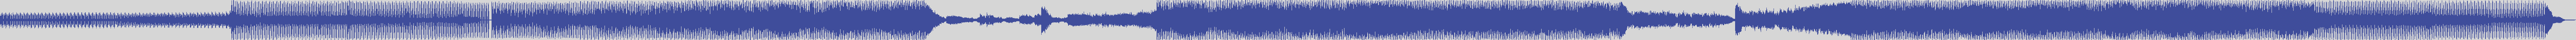 atomic_recordings [AR018] Leo Girardi - 133 [Original Mix] audio wave form